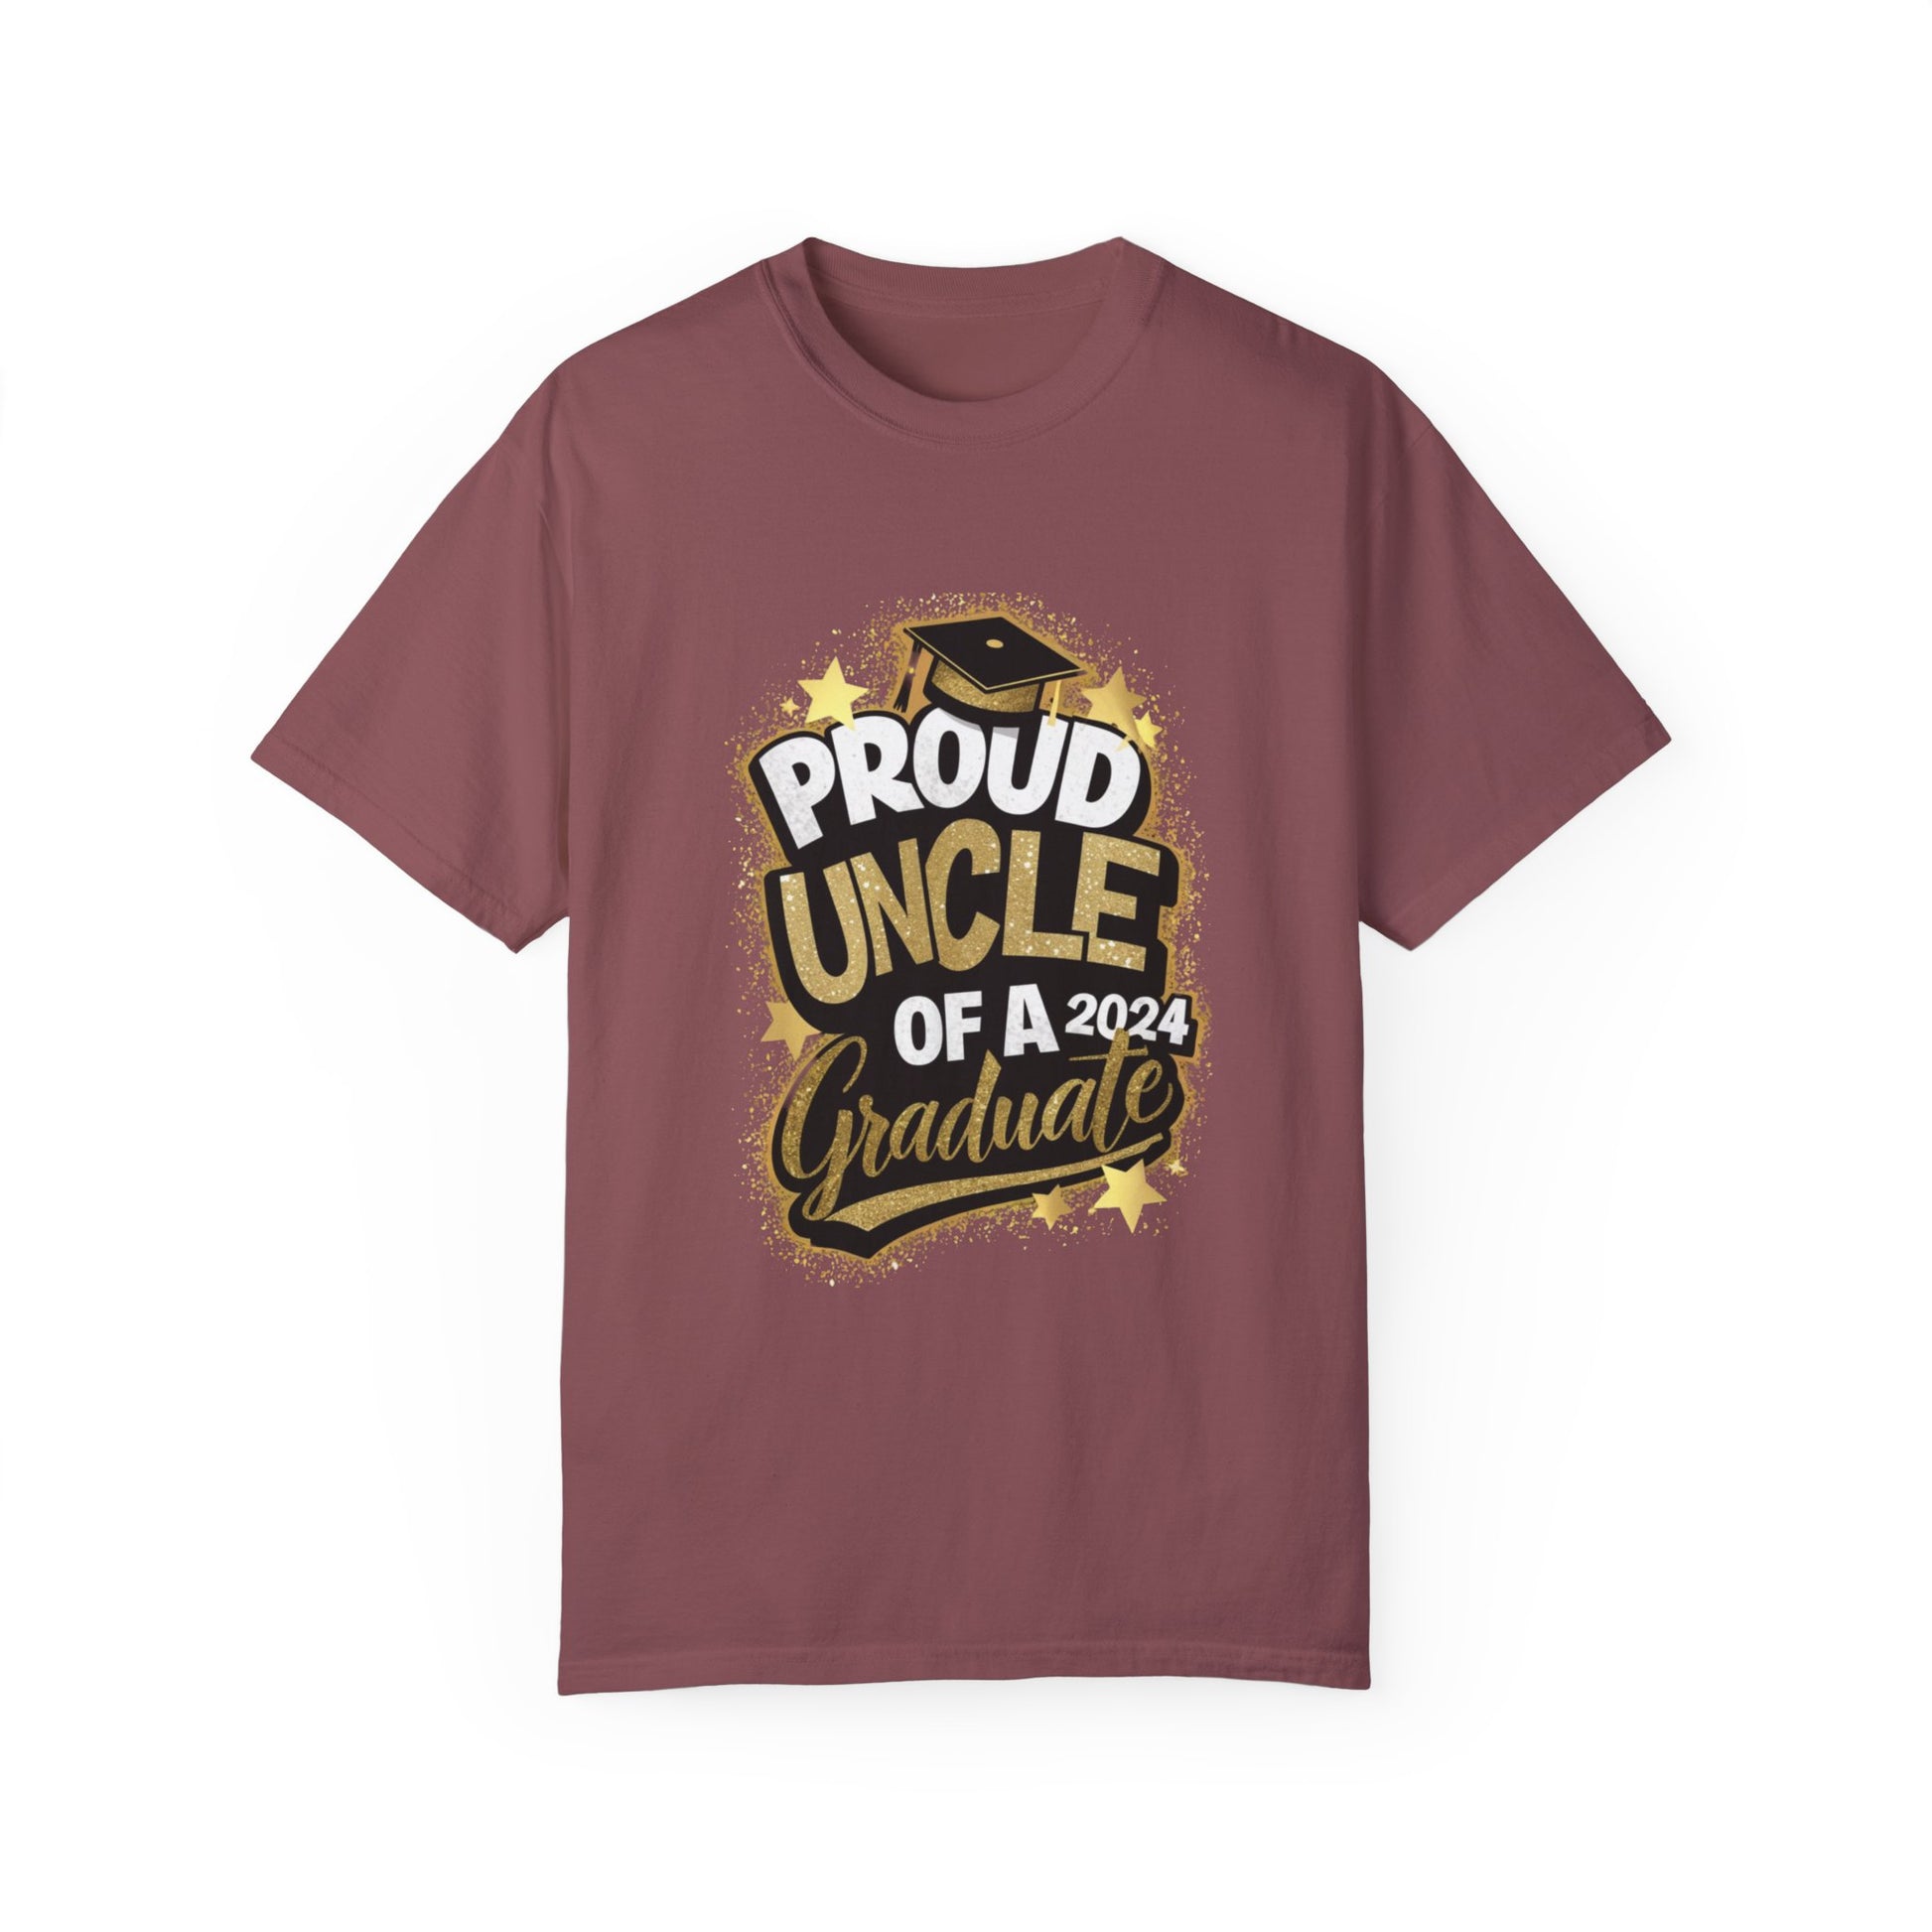 Proud Uncle of a 2024 Graduate Unisex Garment-dyed T-shirt Cotton Funny Humorous Graphic Soft Premium Unisex Men Women Brick T-shirt Birthday Gift-5